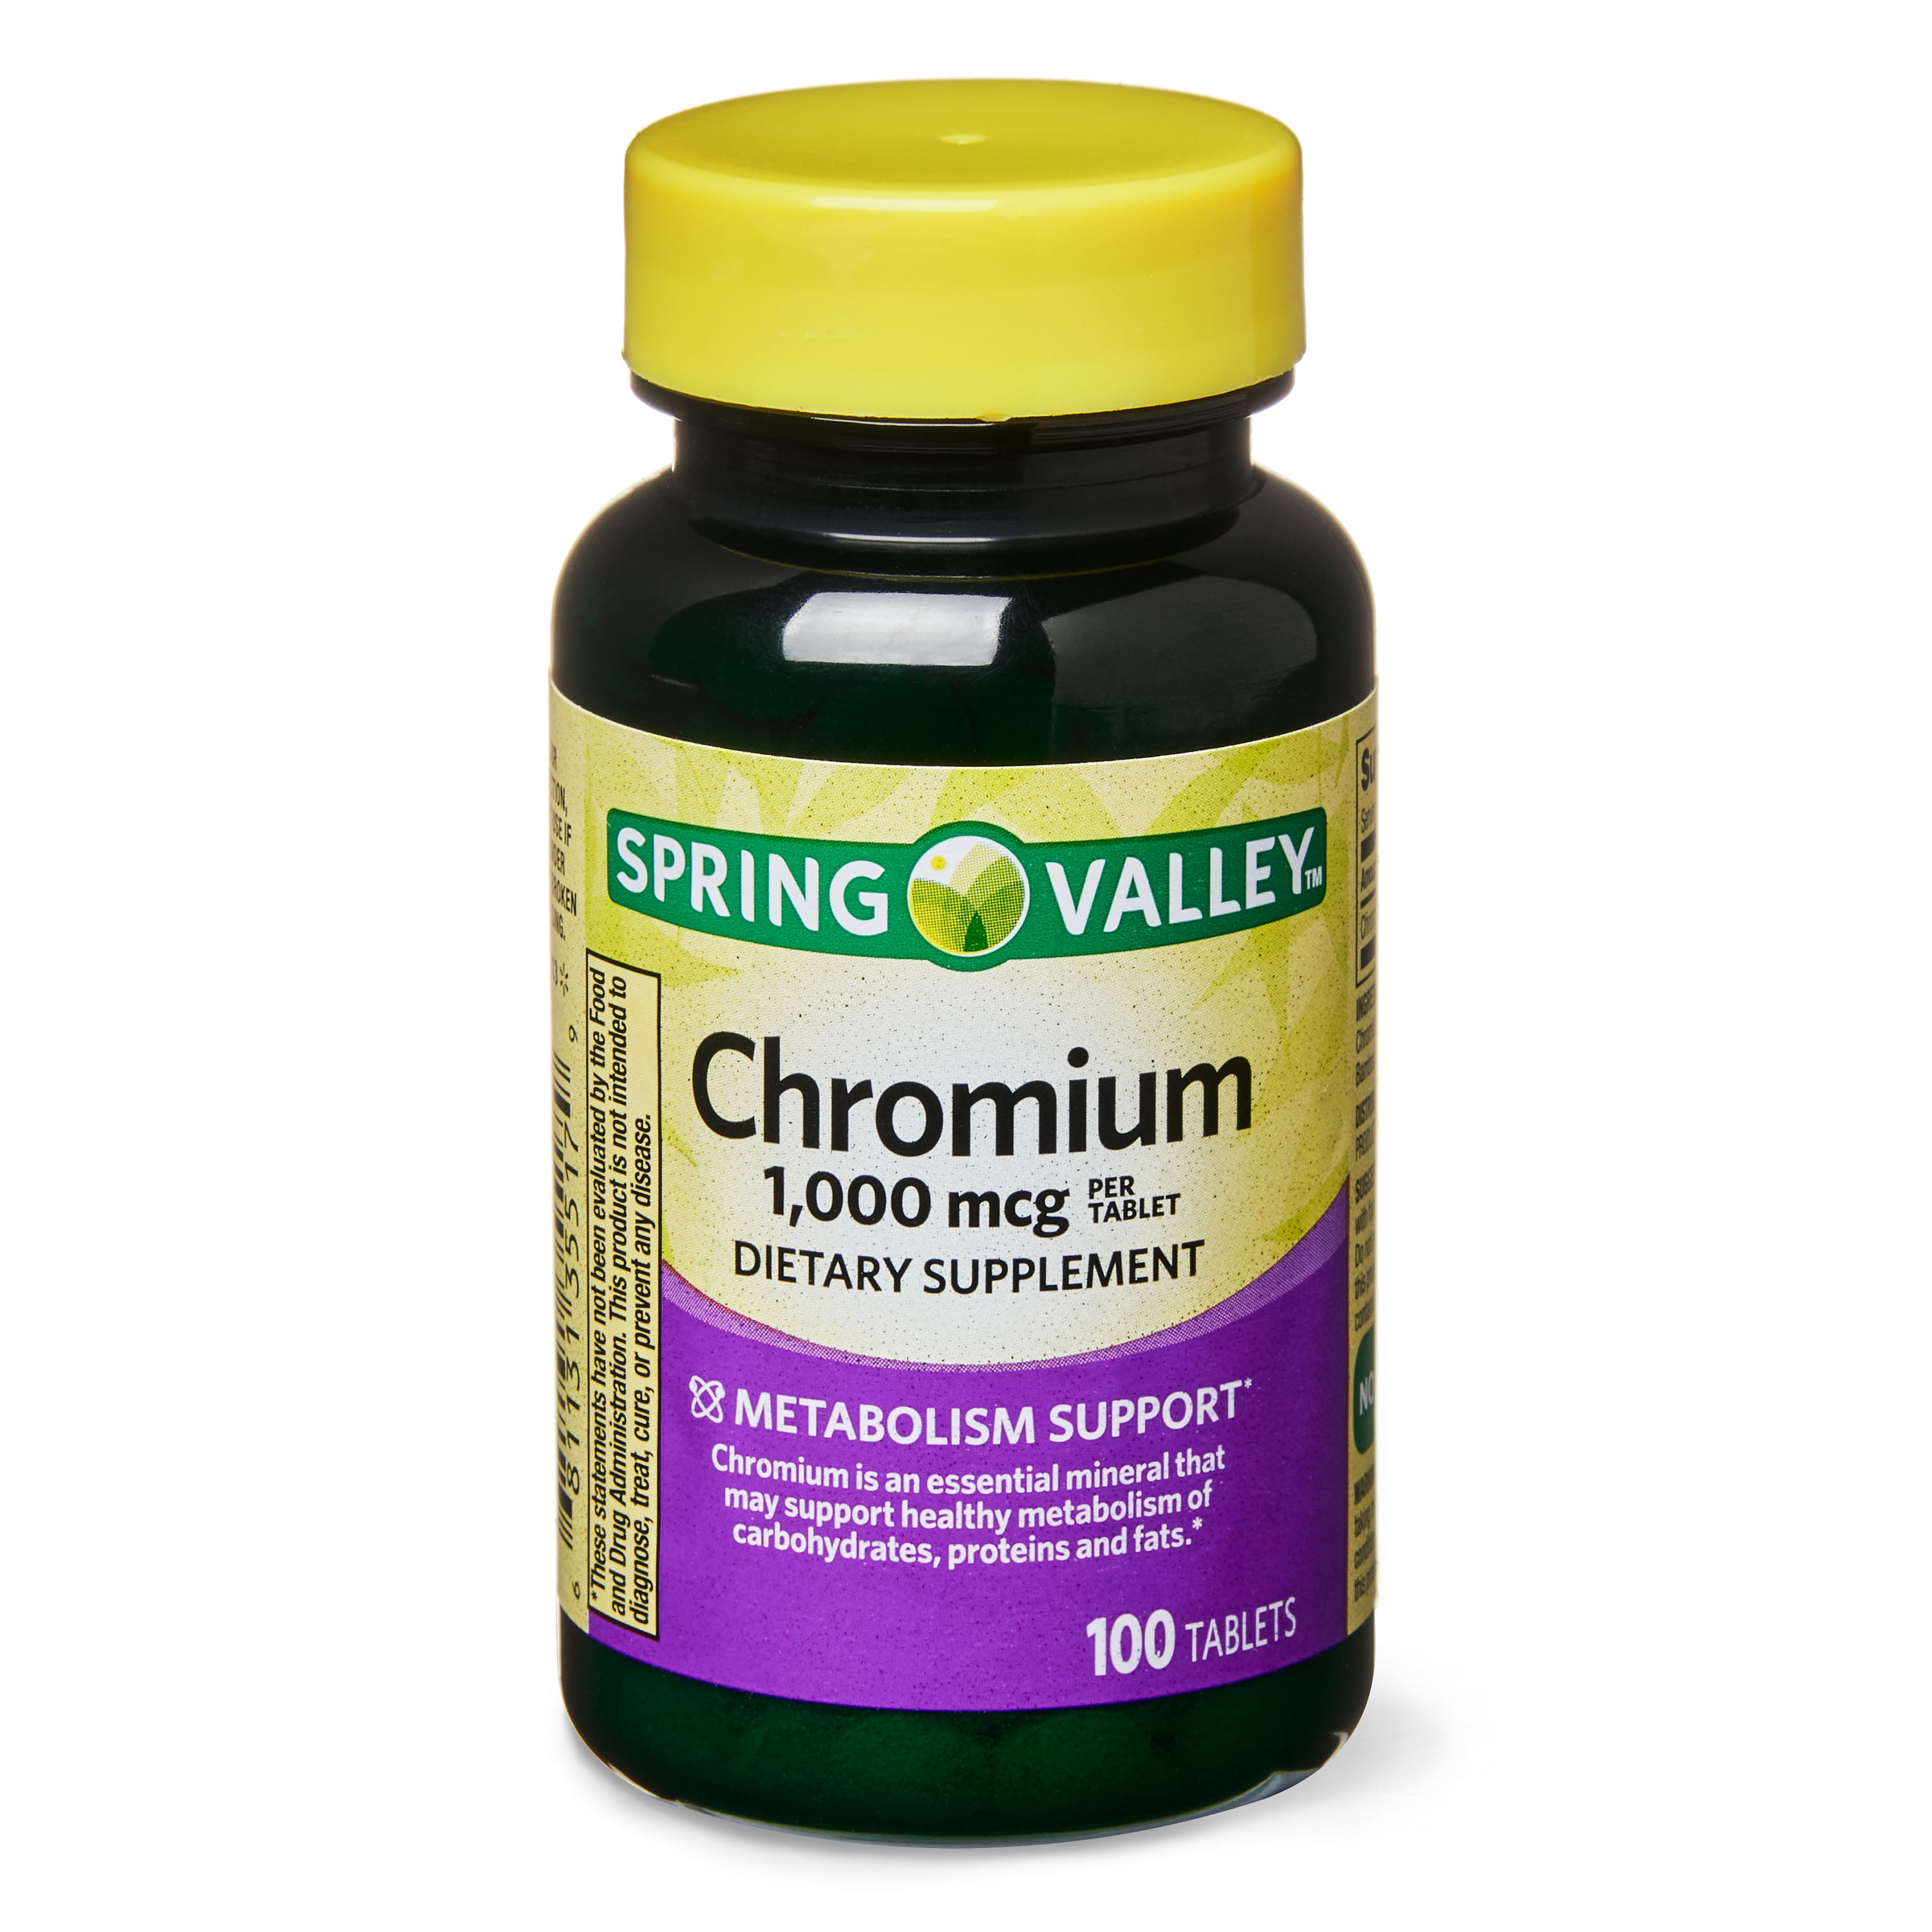 cinnamon and chromium spring valley ingredients